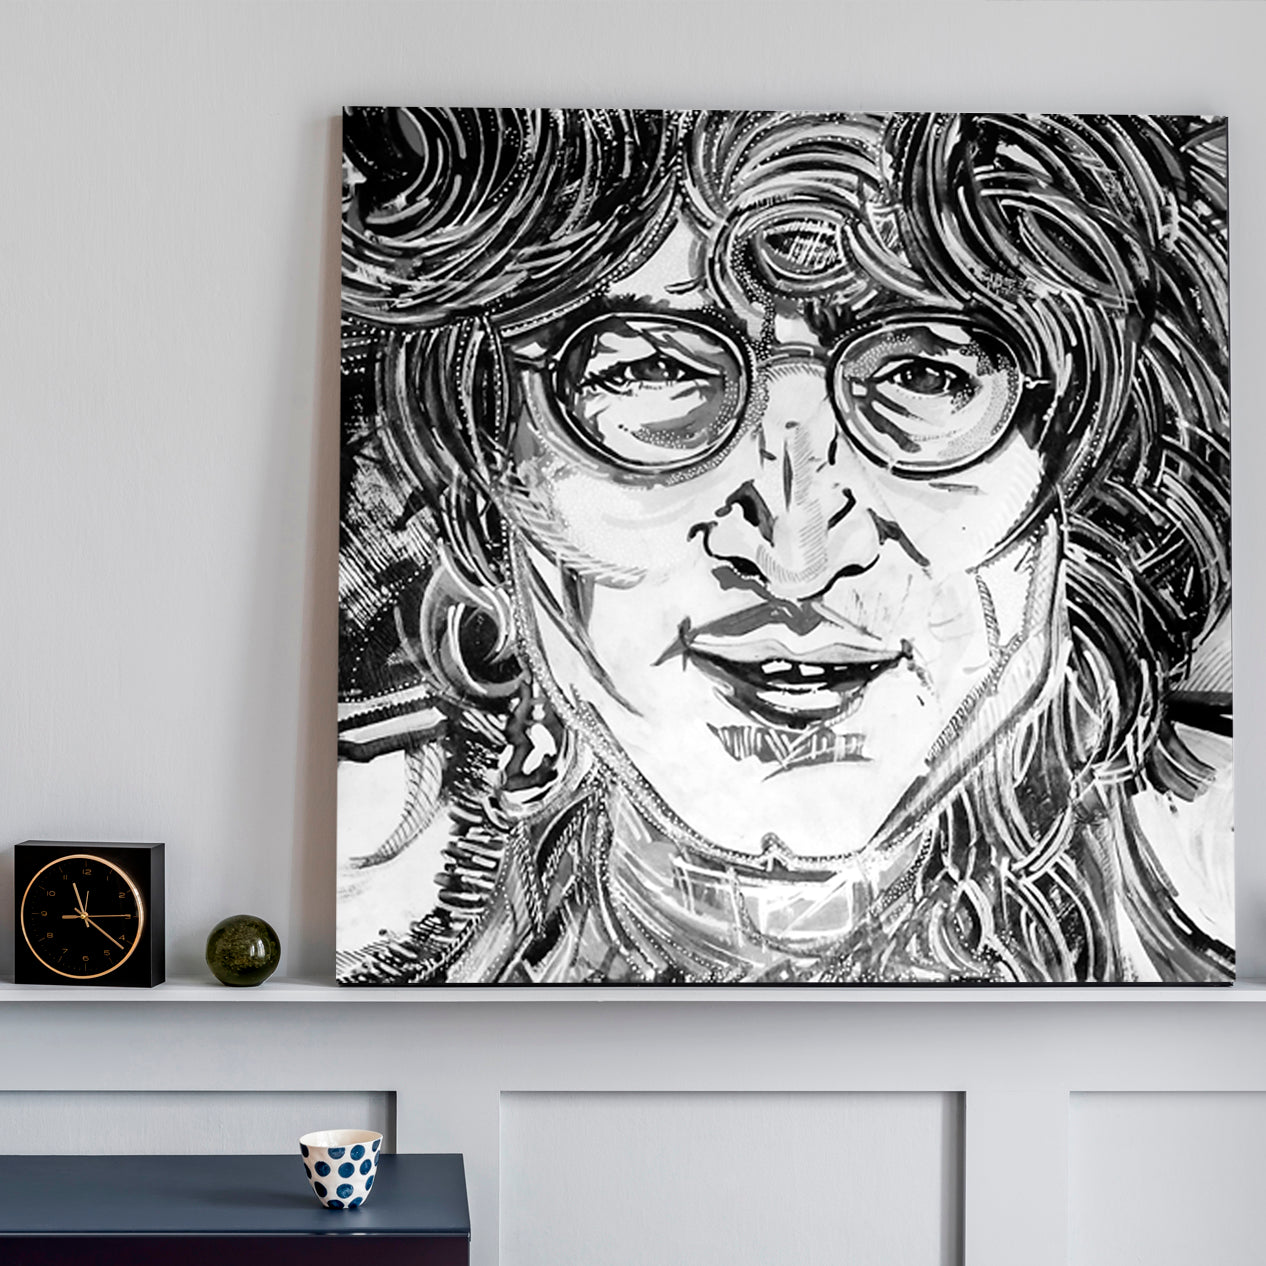 JOHN LENNON  Prague John Lennon Wall Street Art Canvas Print - Square Black and White Wall Art Print Artesty   